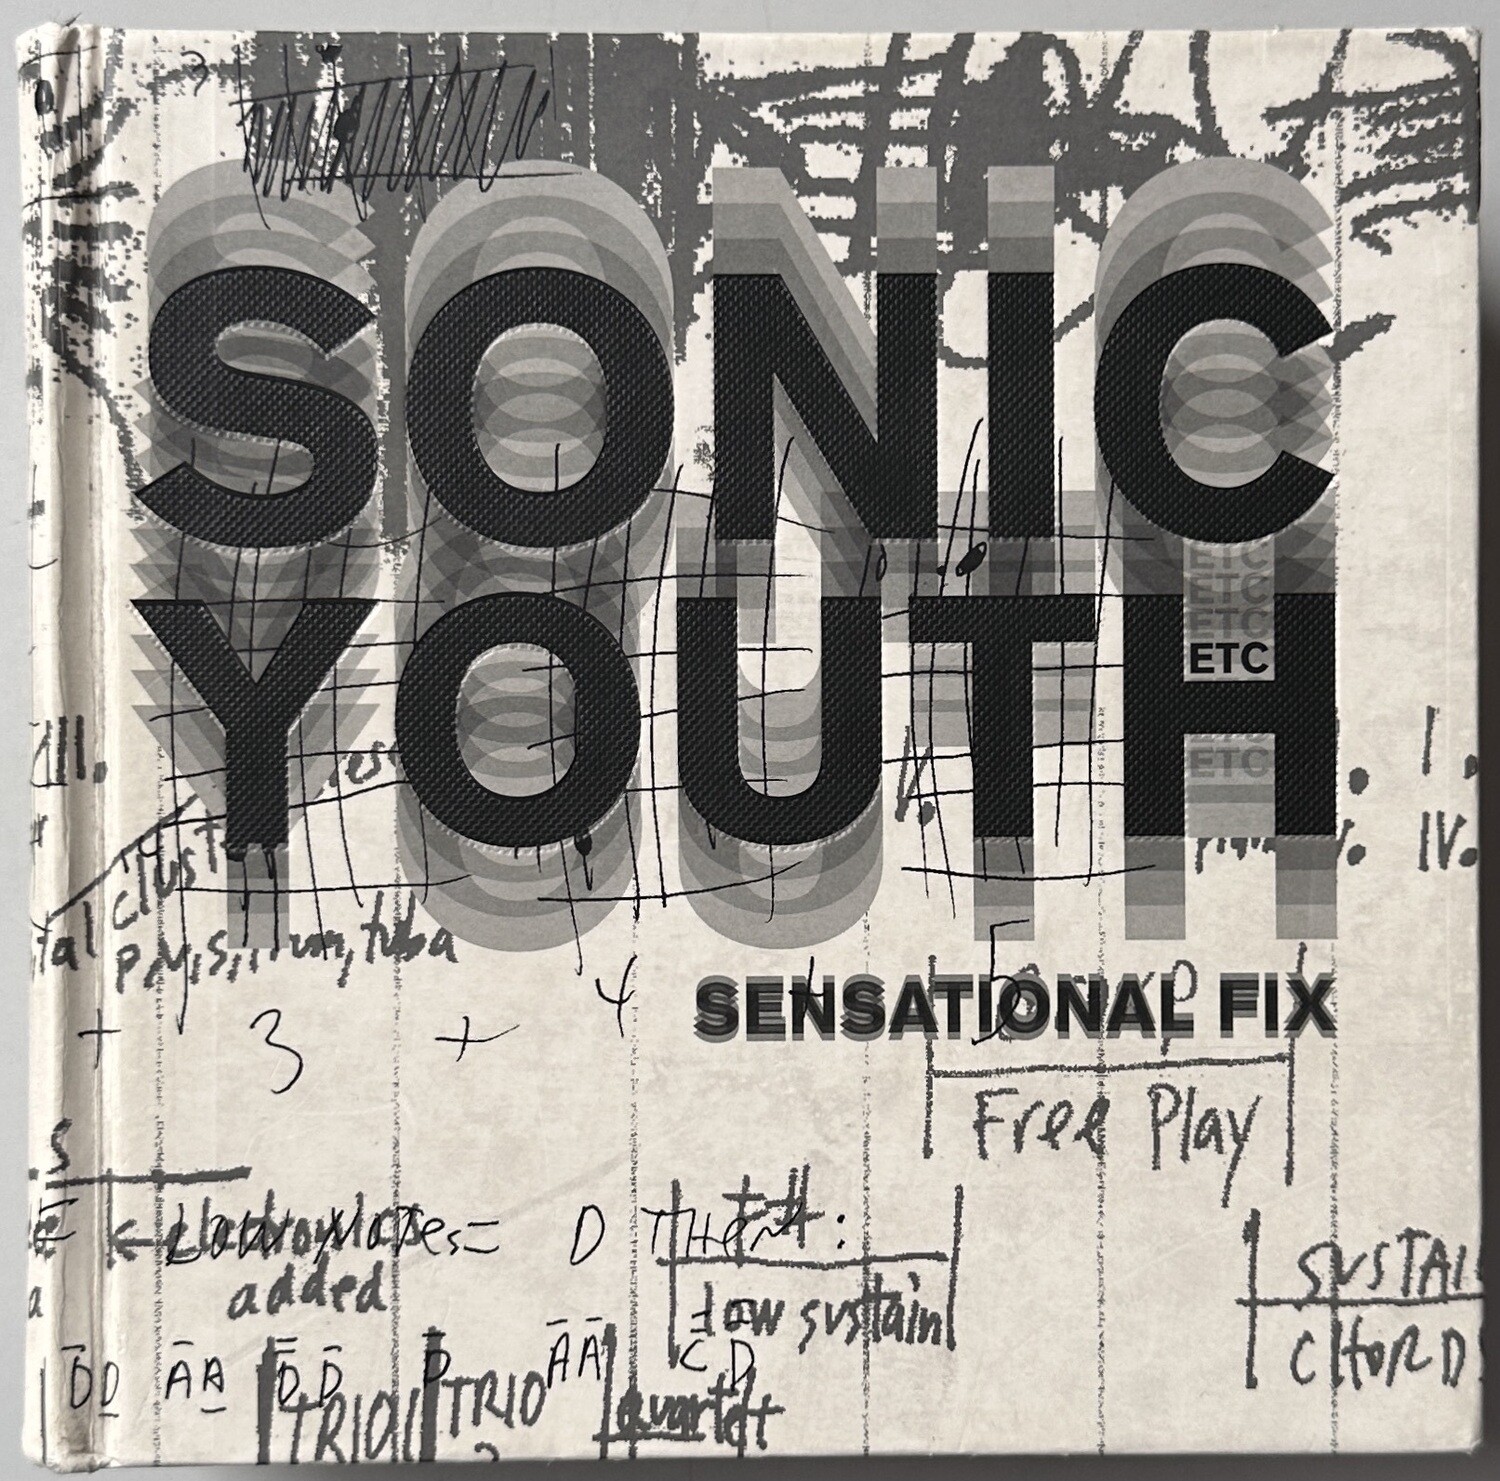 Sonic Youth Sensational Fix